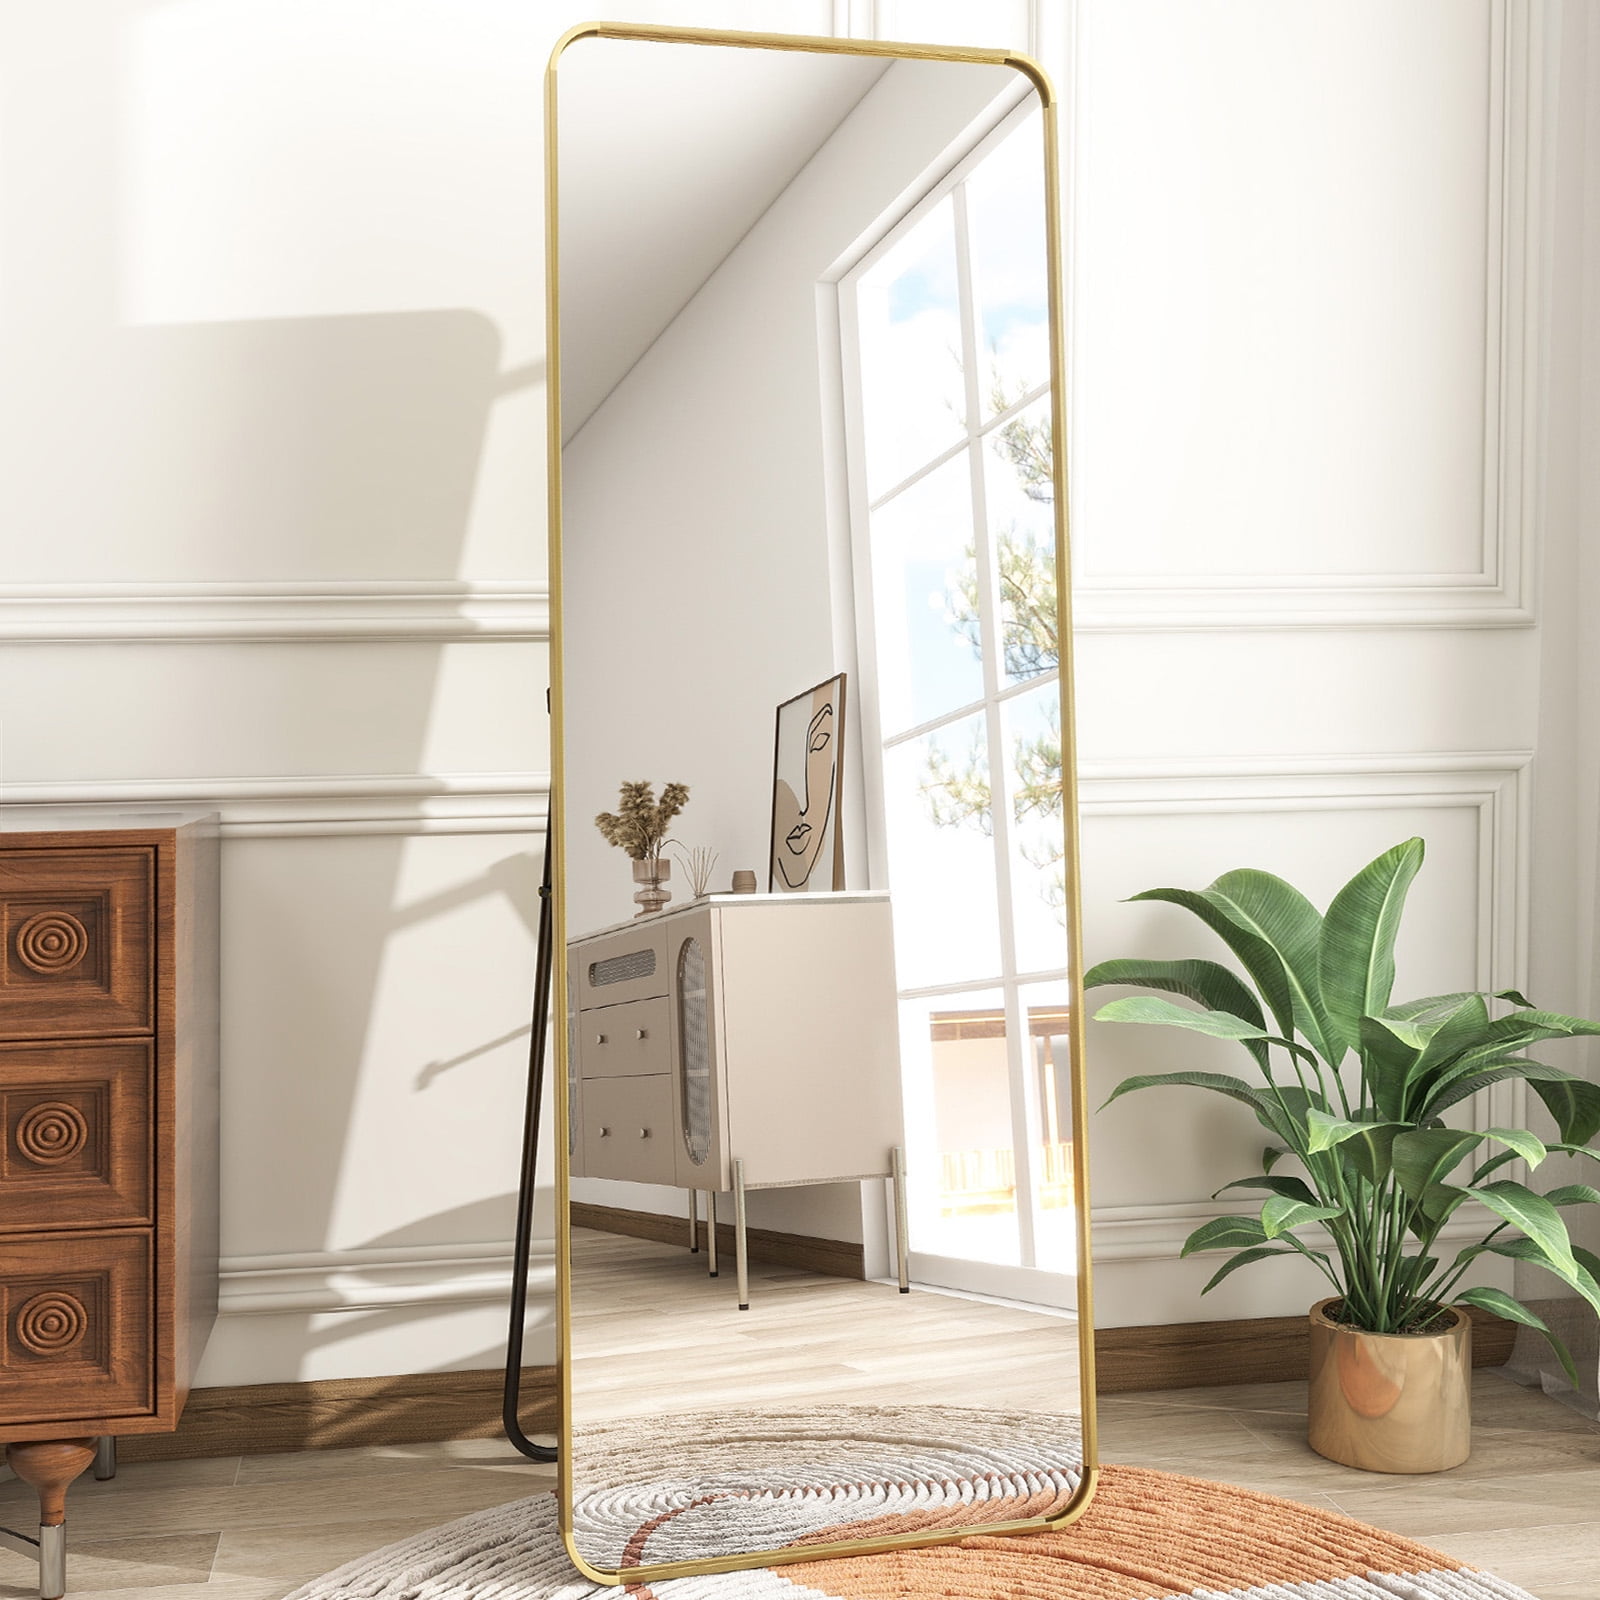 BEAUTYPEAK 21x64 Full Length Mirror Rectangle Safe Standing Floor Mirror,Gold - image 1 of 6